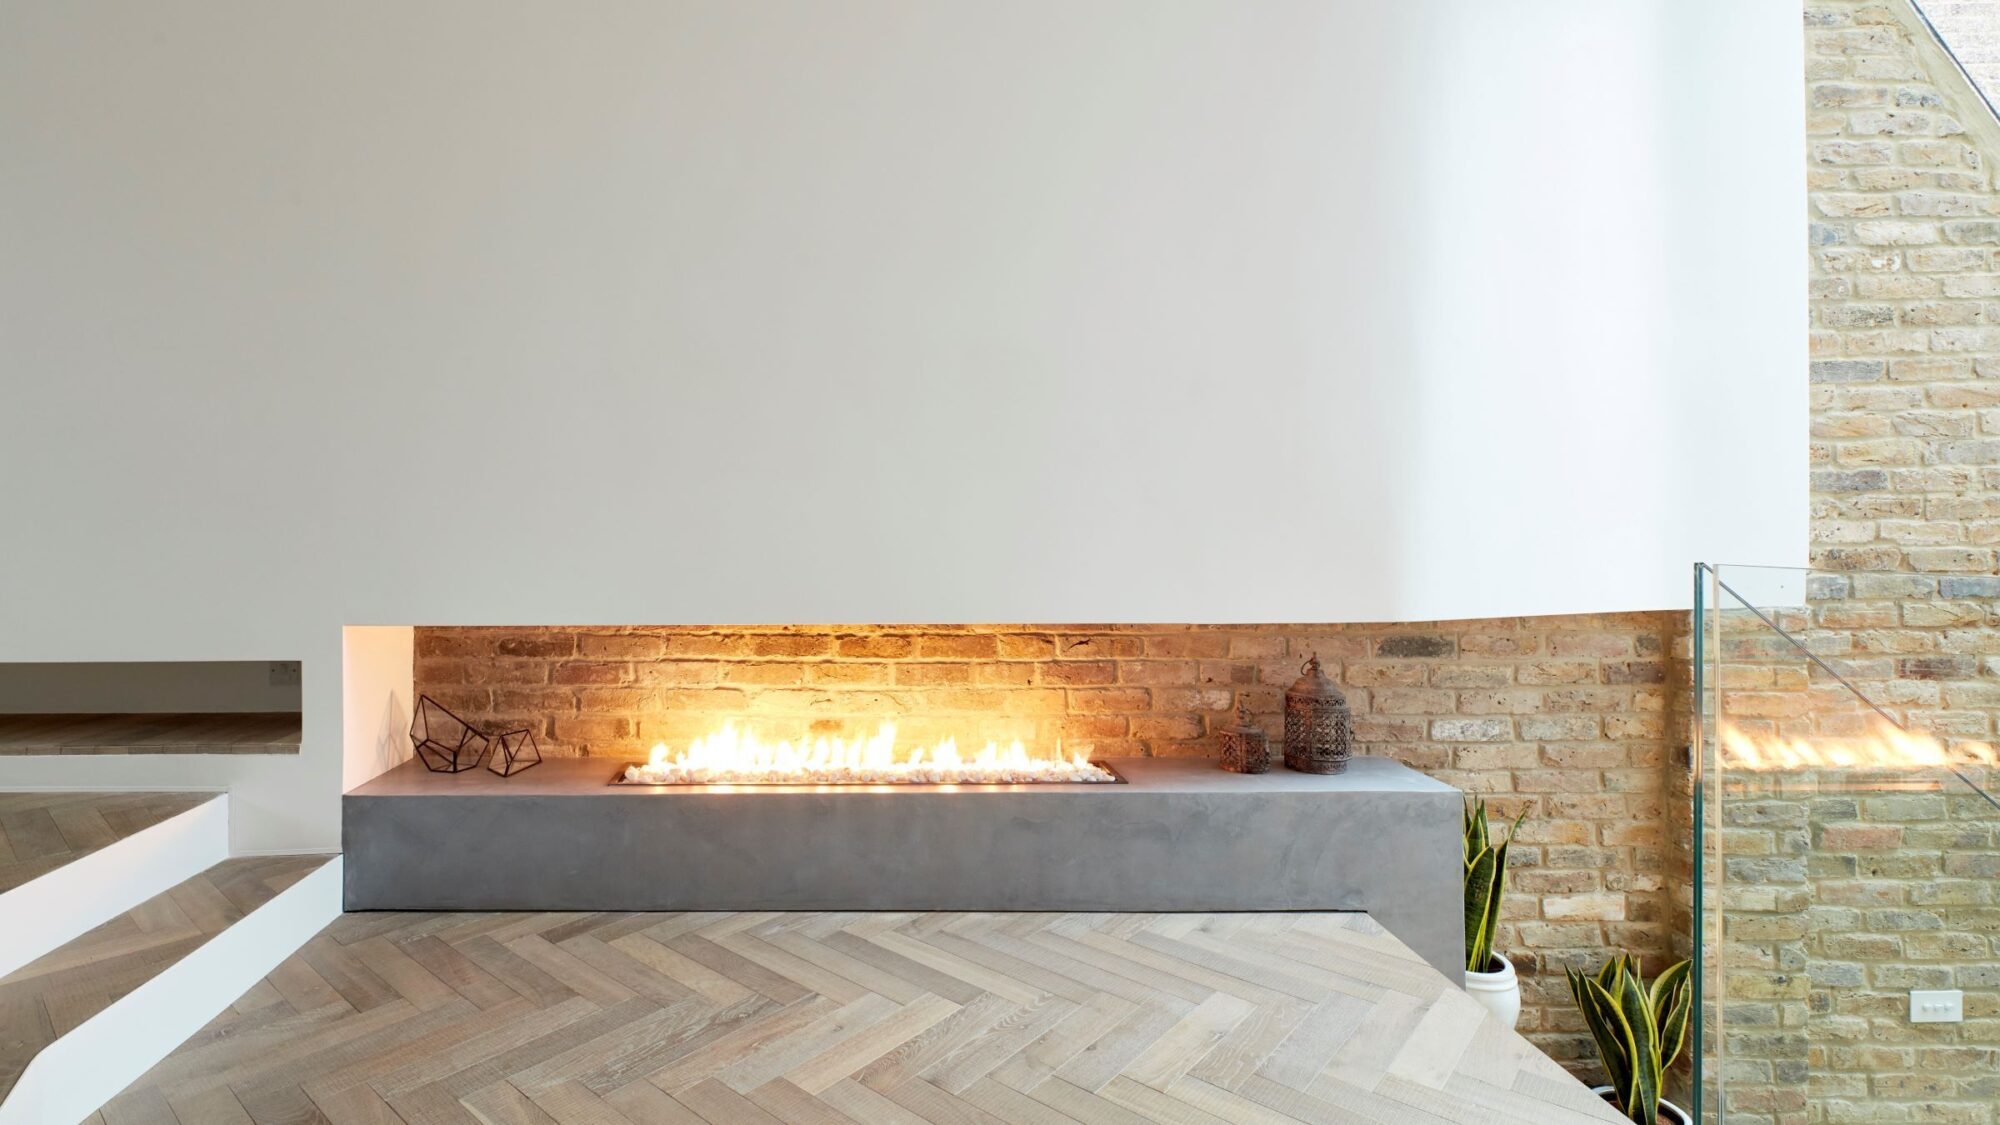 M Clayton tate bute herringbone floor with modern fire place